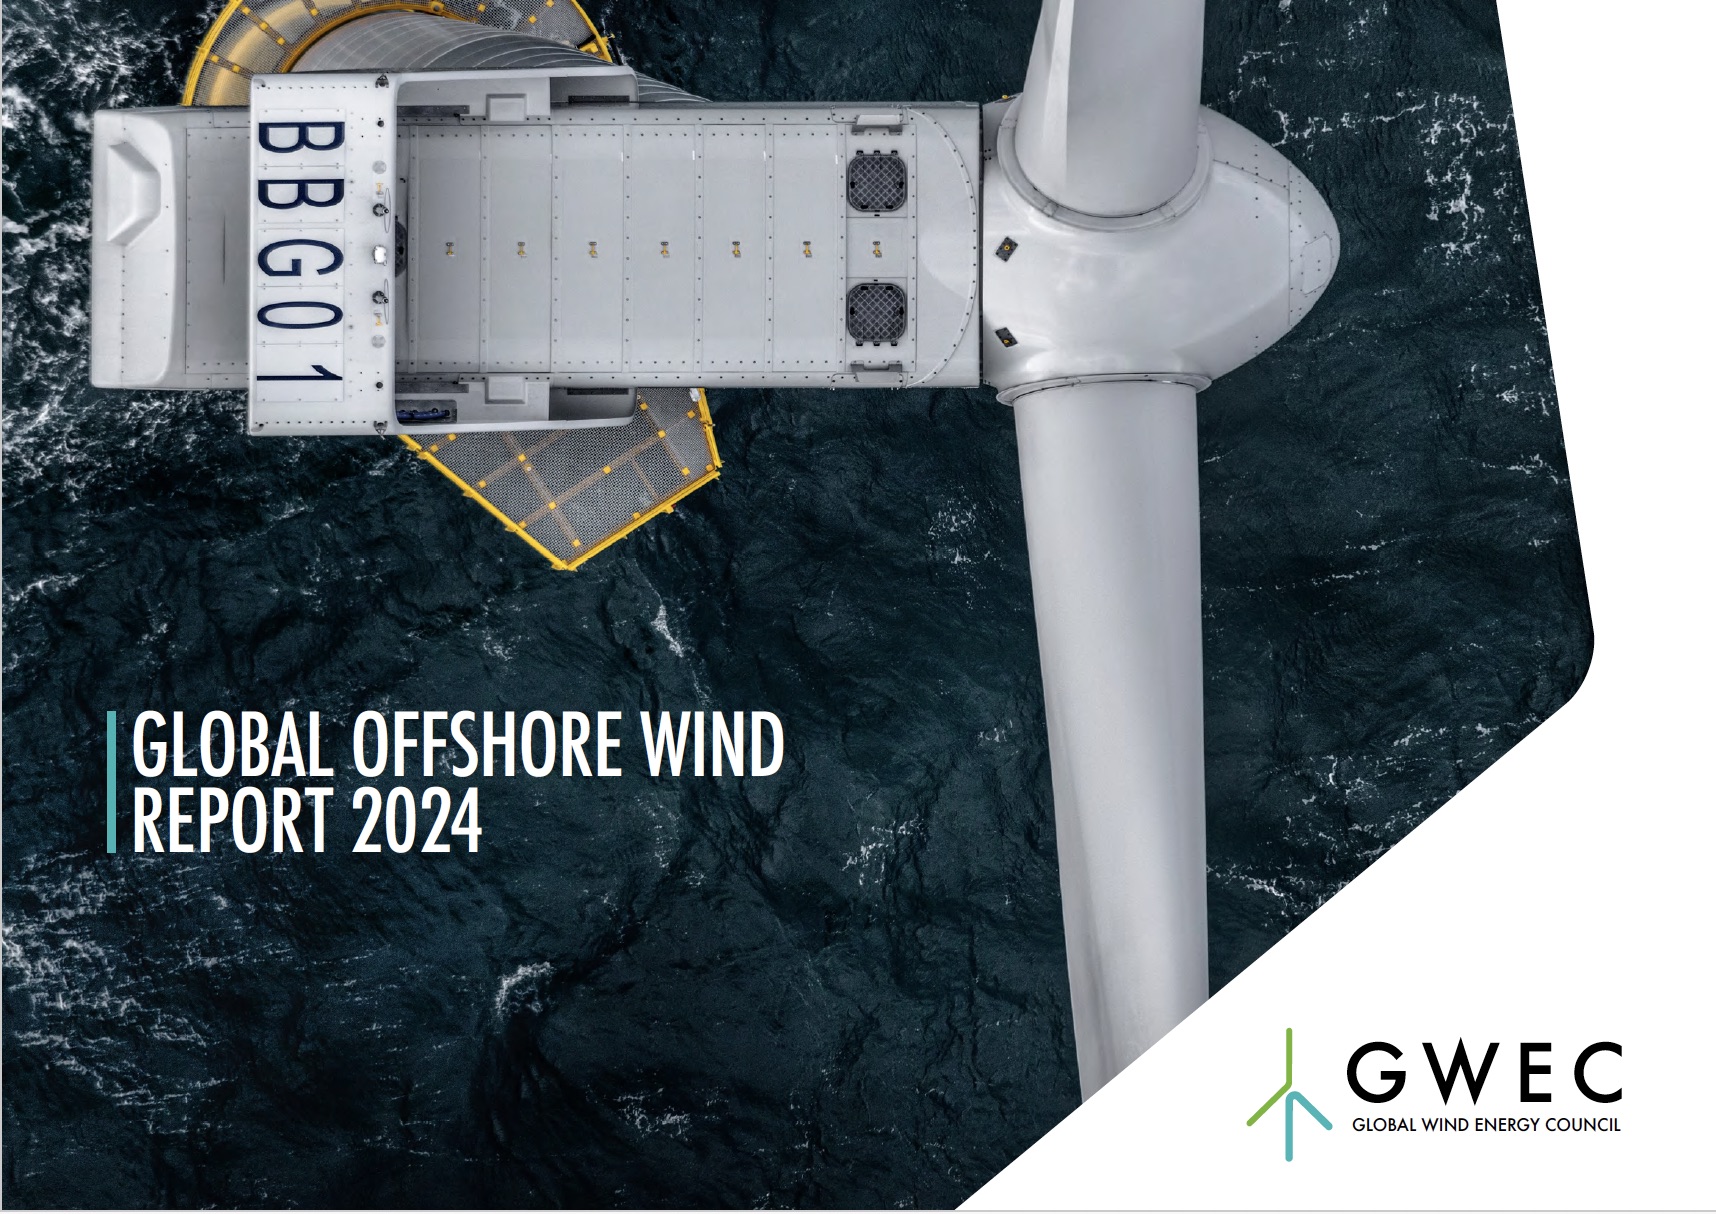 Global Offshore Wind Report 2024 - Alternative Energy Resource Video